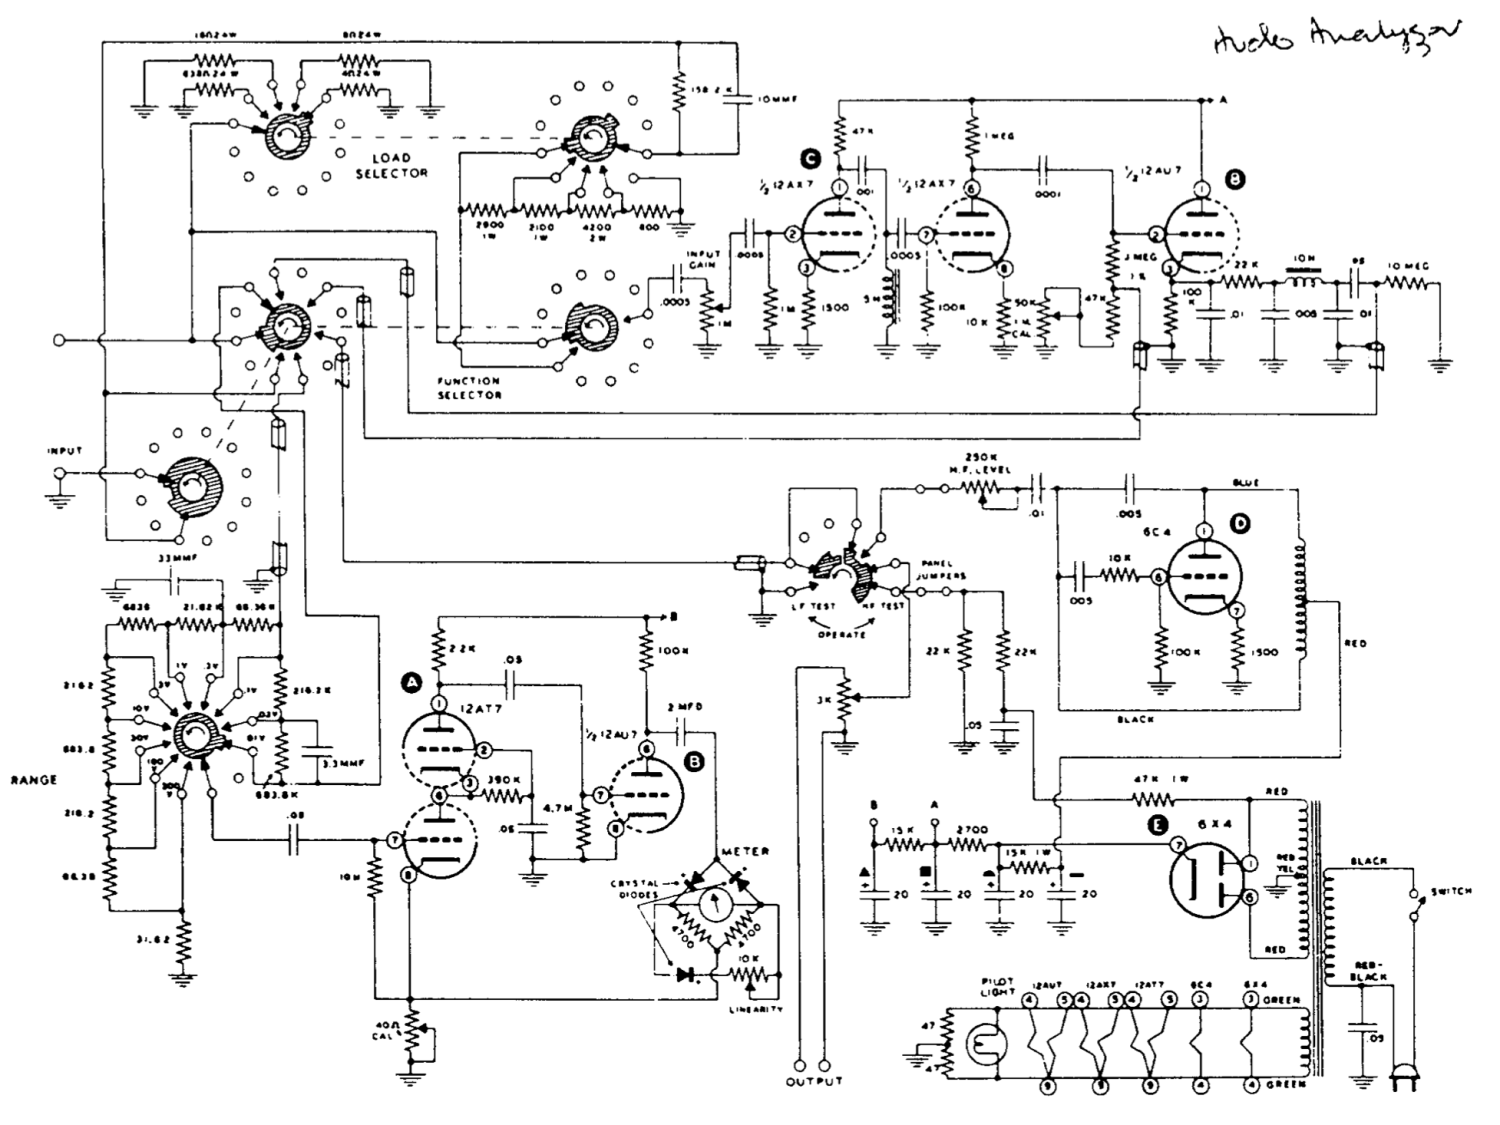 Heathkit AA-1 Audio Analyzer - Schematic